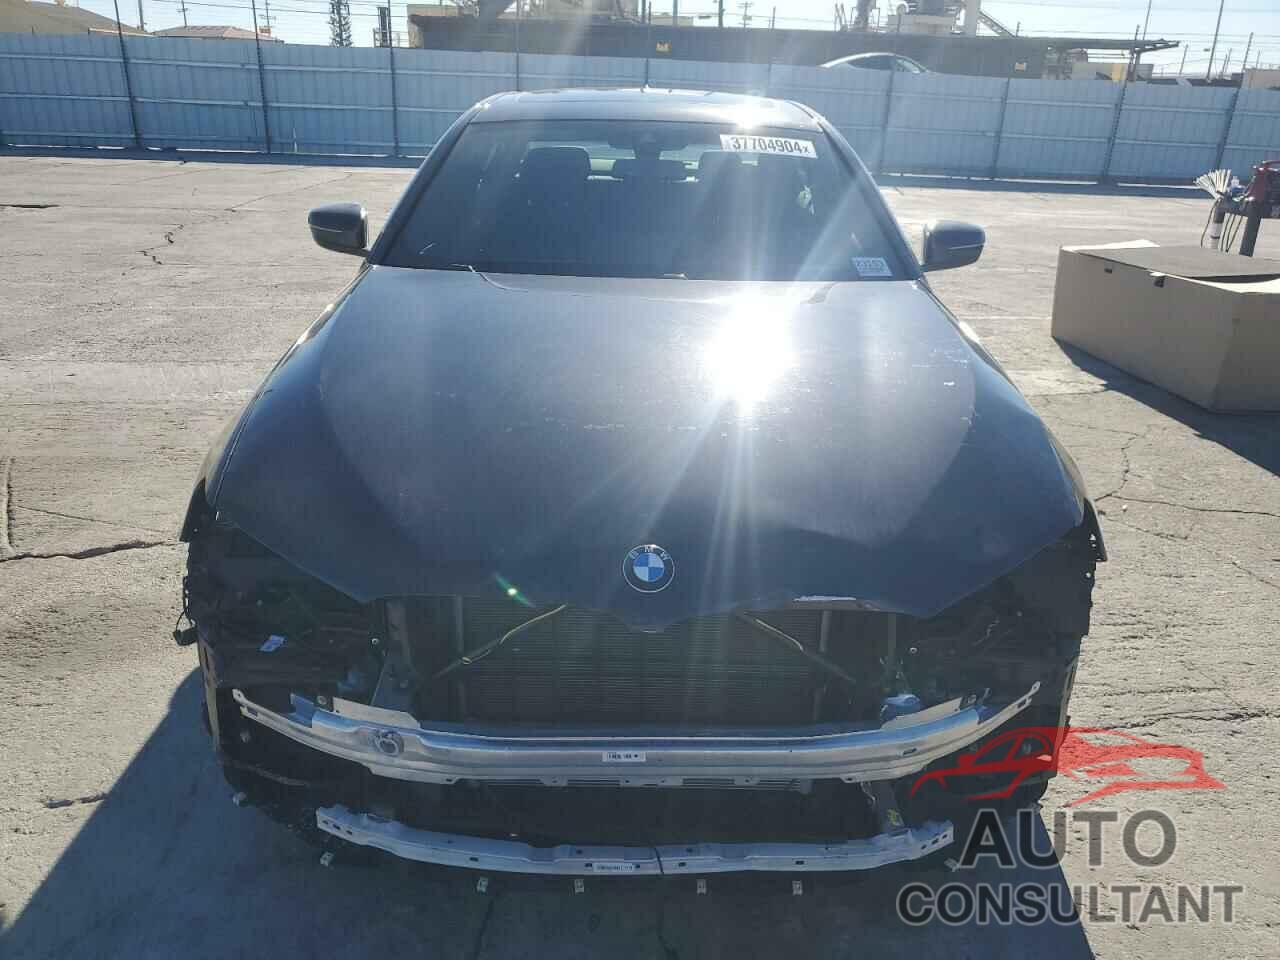 BMW 5 SERIES 2023 - WBA53BH0XPCL60041